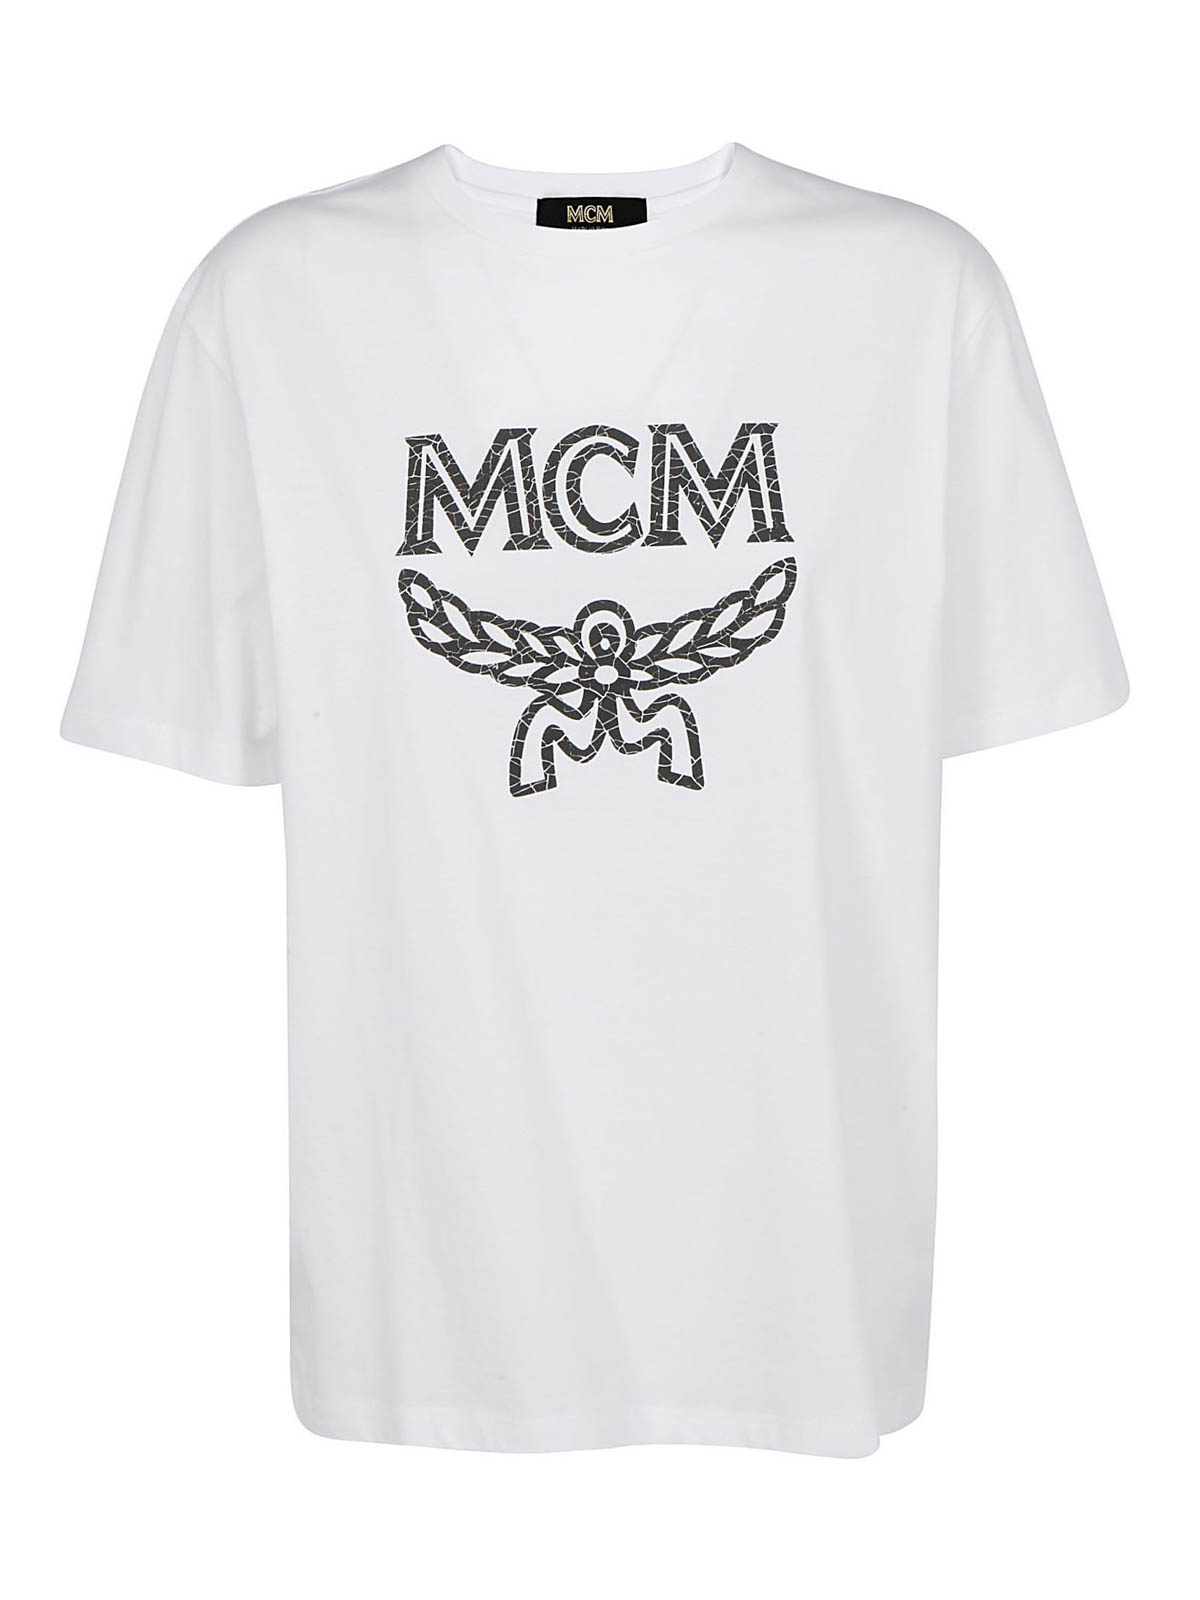 T-shirts Mcm - Cracked effect logo T-shirt - MHTASMM04WT | iKRIX.com